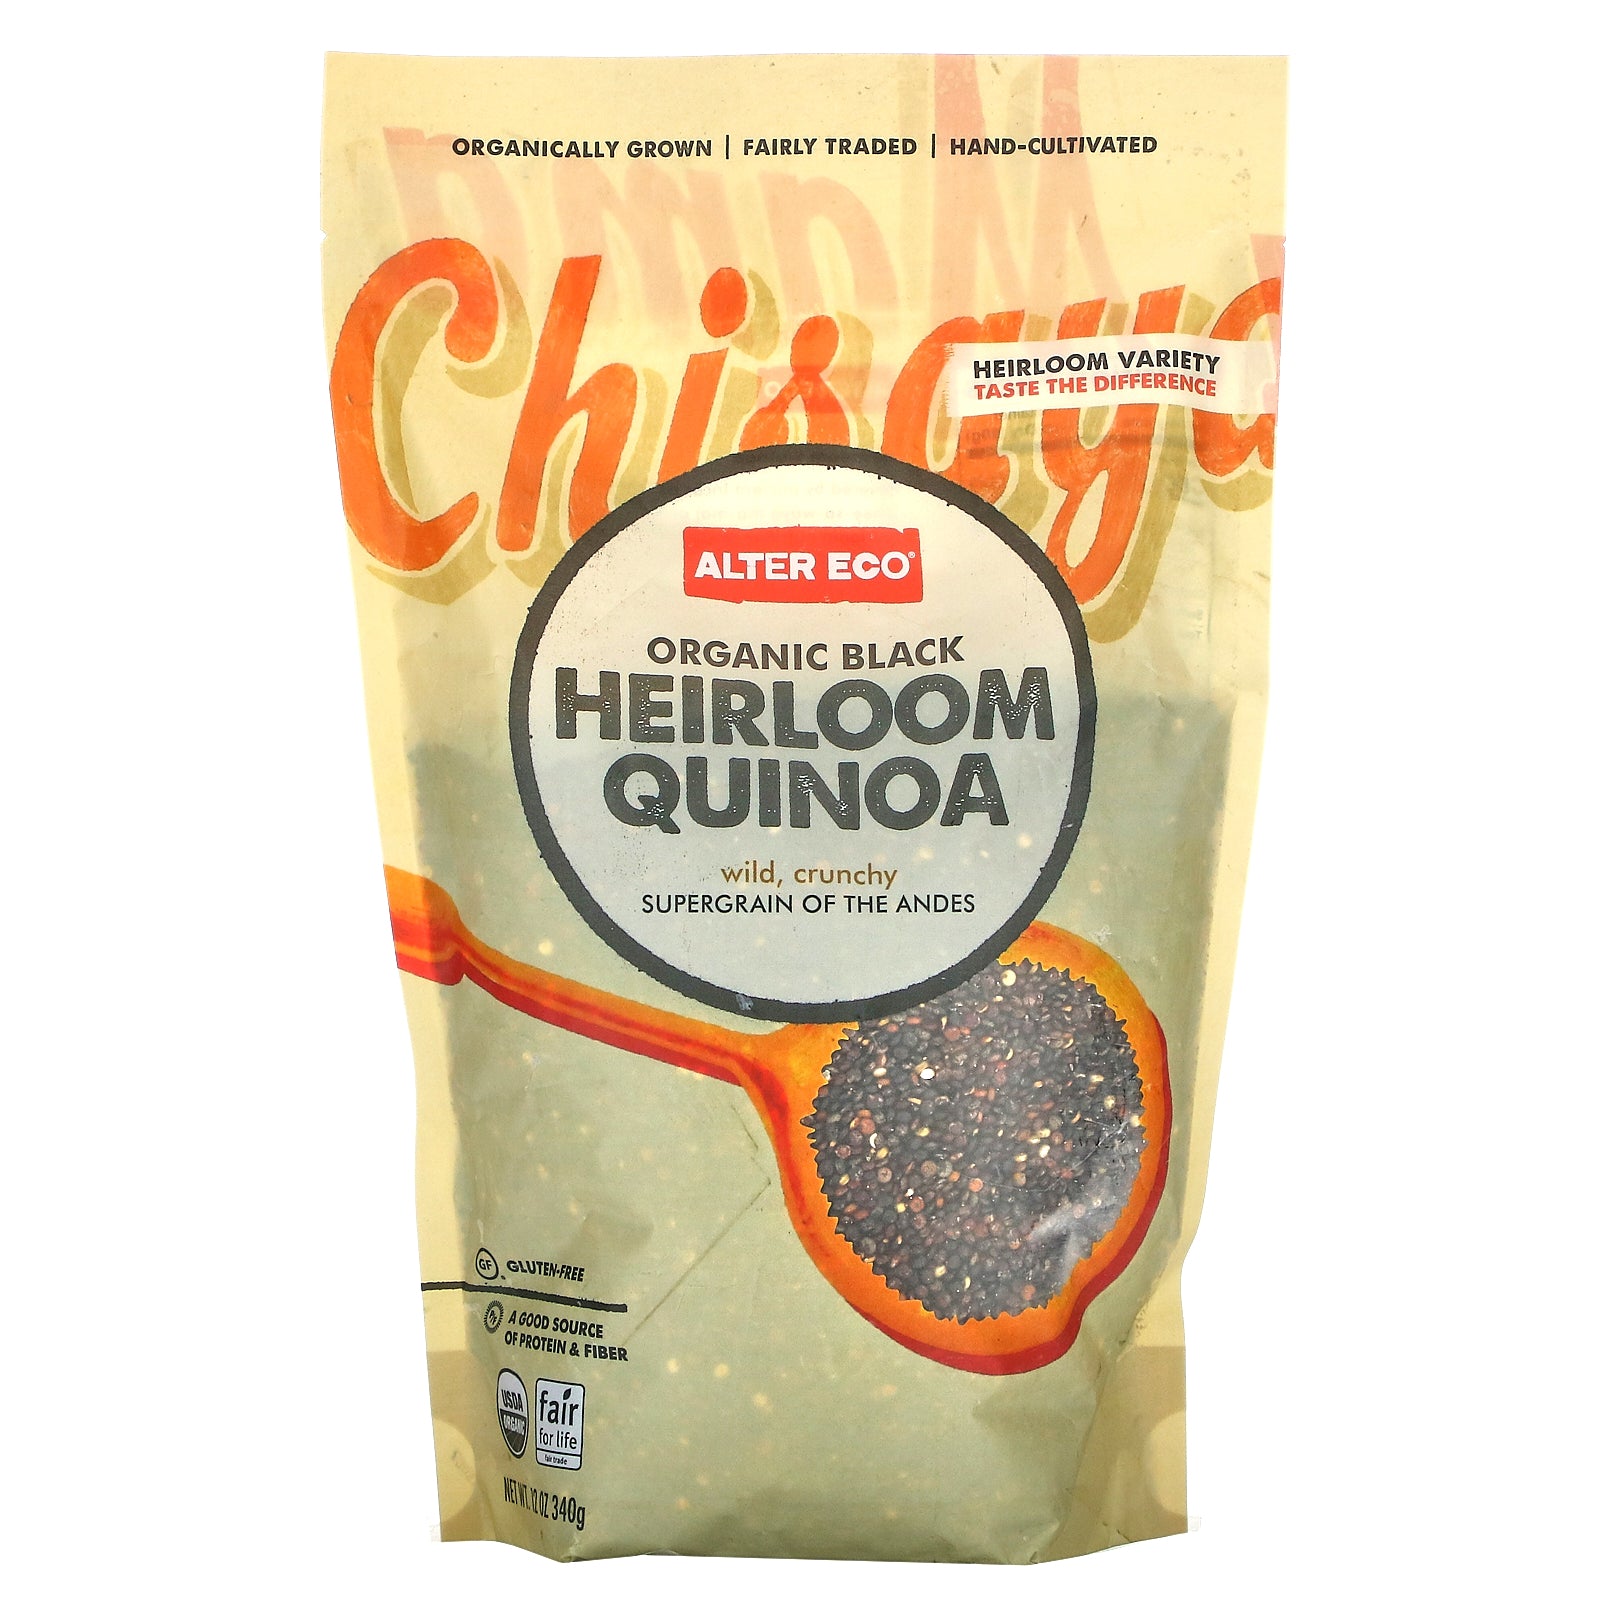 Alter Eco, Organic Black Heirloom Quinoa, 12 oz (340 g)